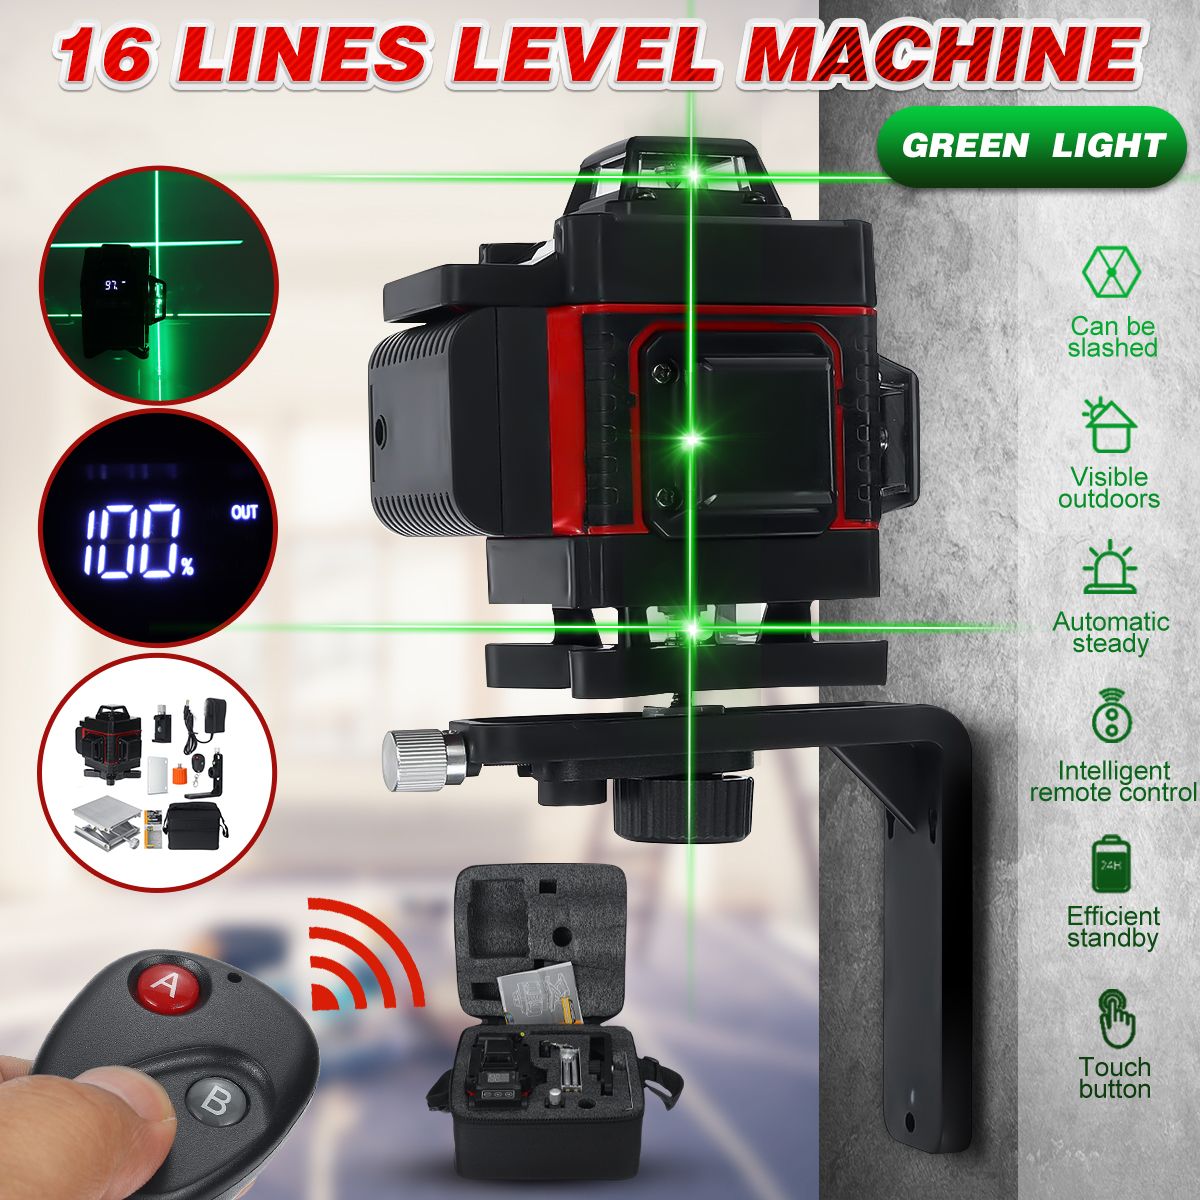 16Line-Green-Light-Laser-Machine-Laser-Level-Horizontal-amp-Vertical-Digital-Display-1690557